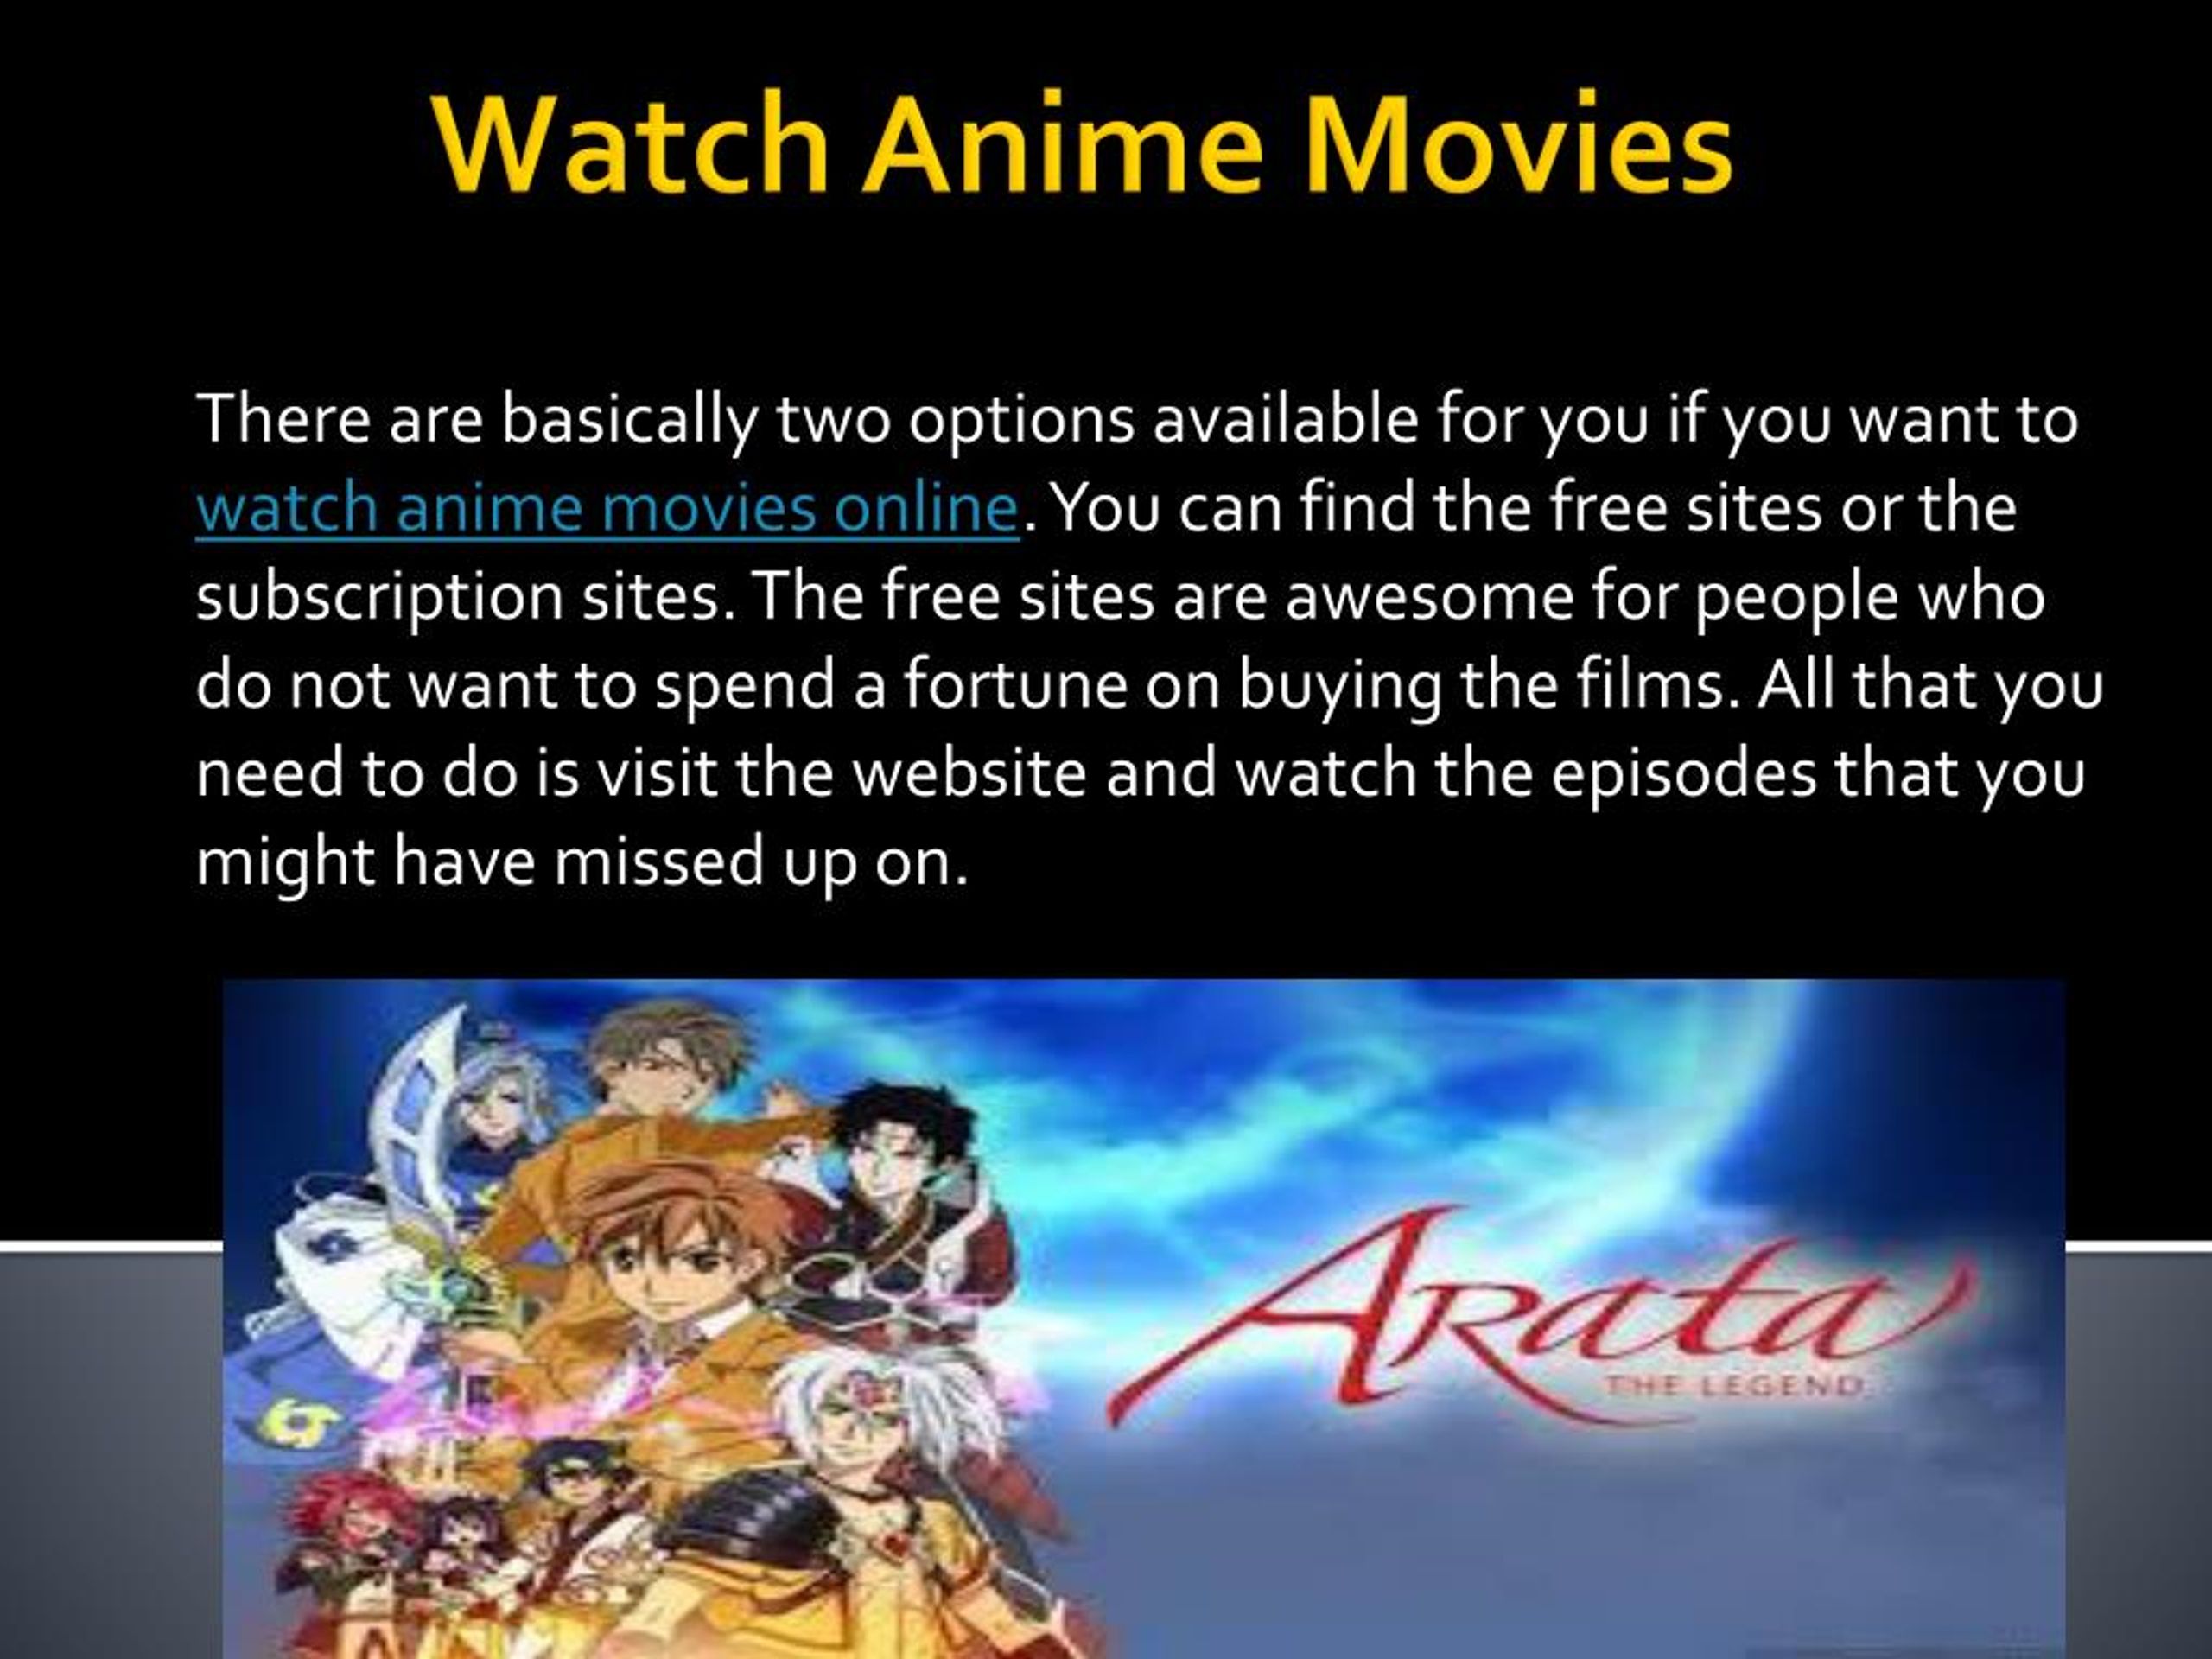 Arata: The Legend - streaming tv show online